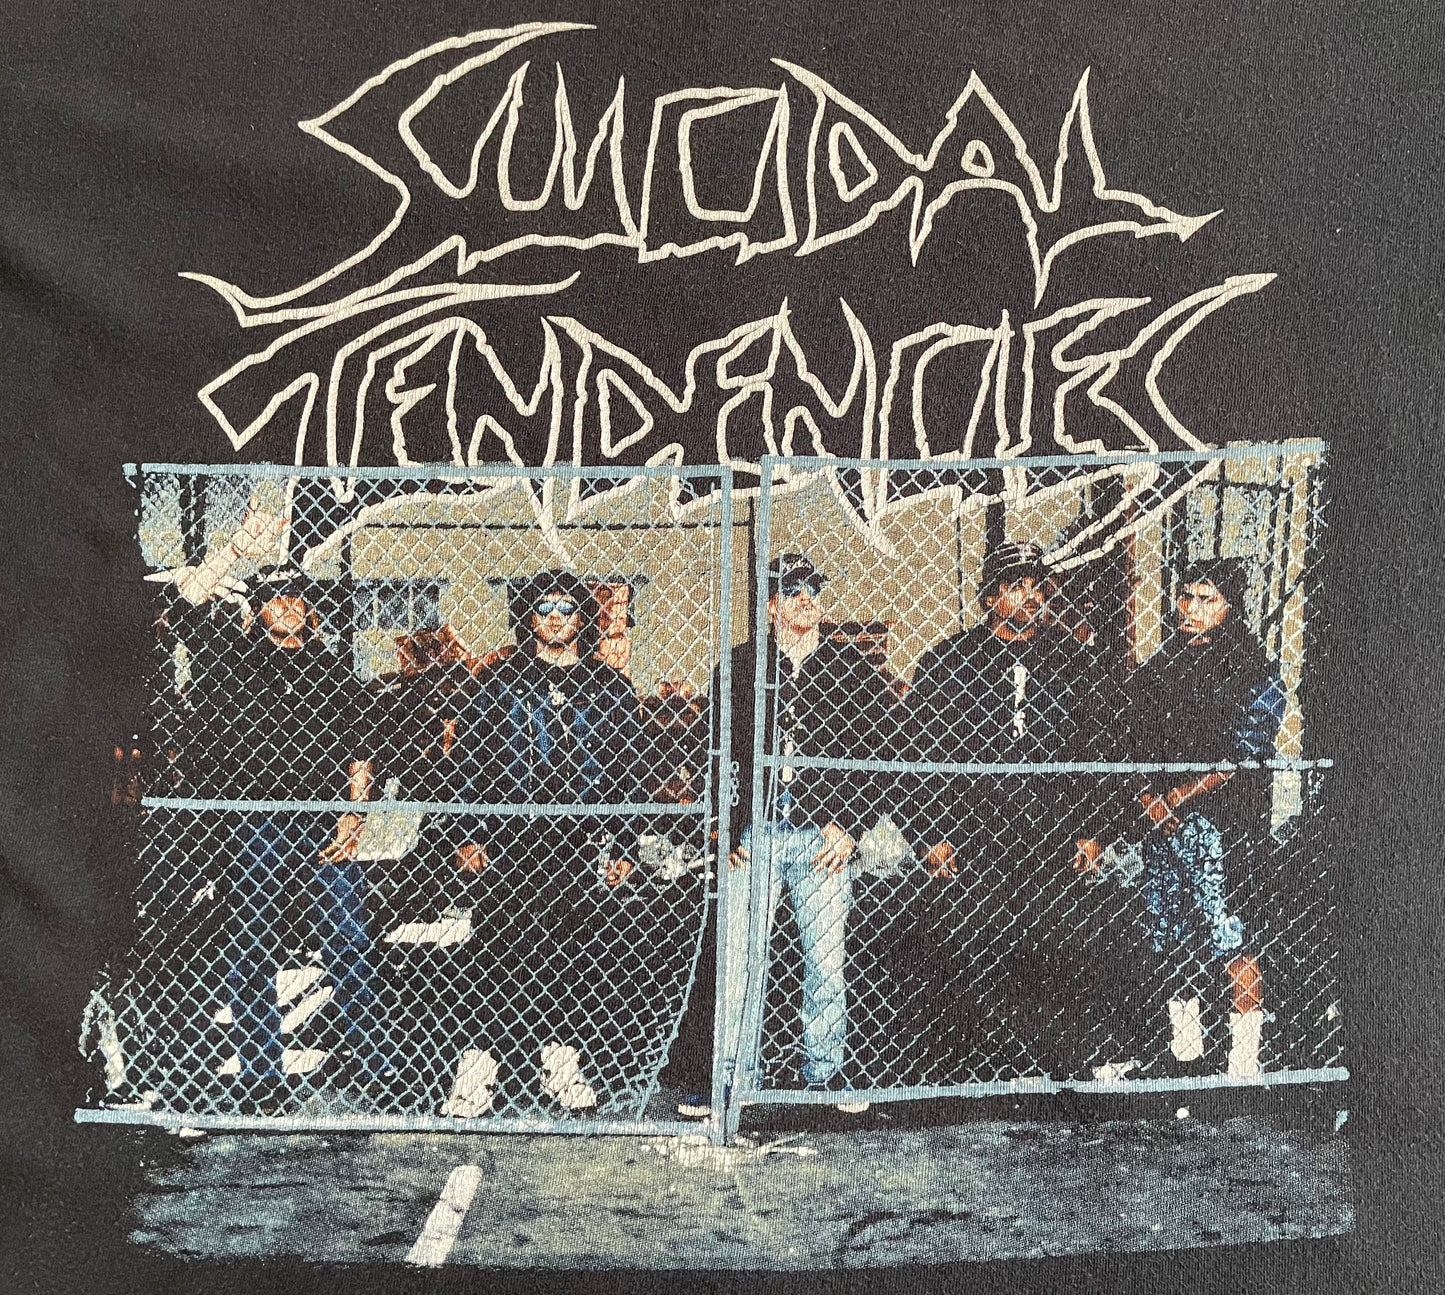 Suicidal Tendencies - Original Vintage 1991 t-shirt